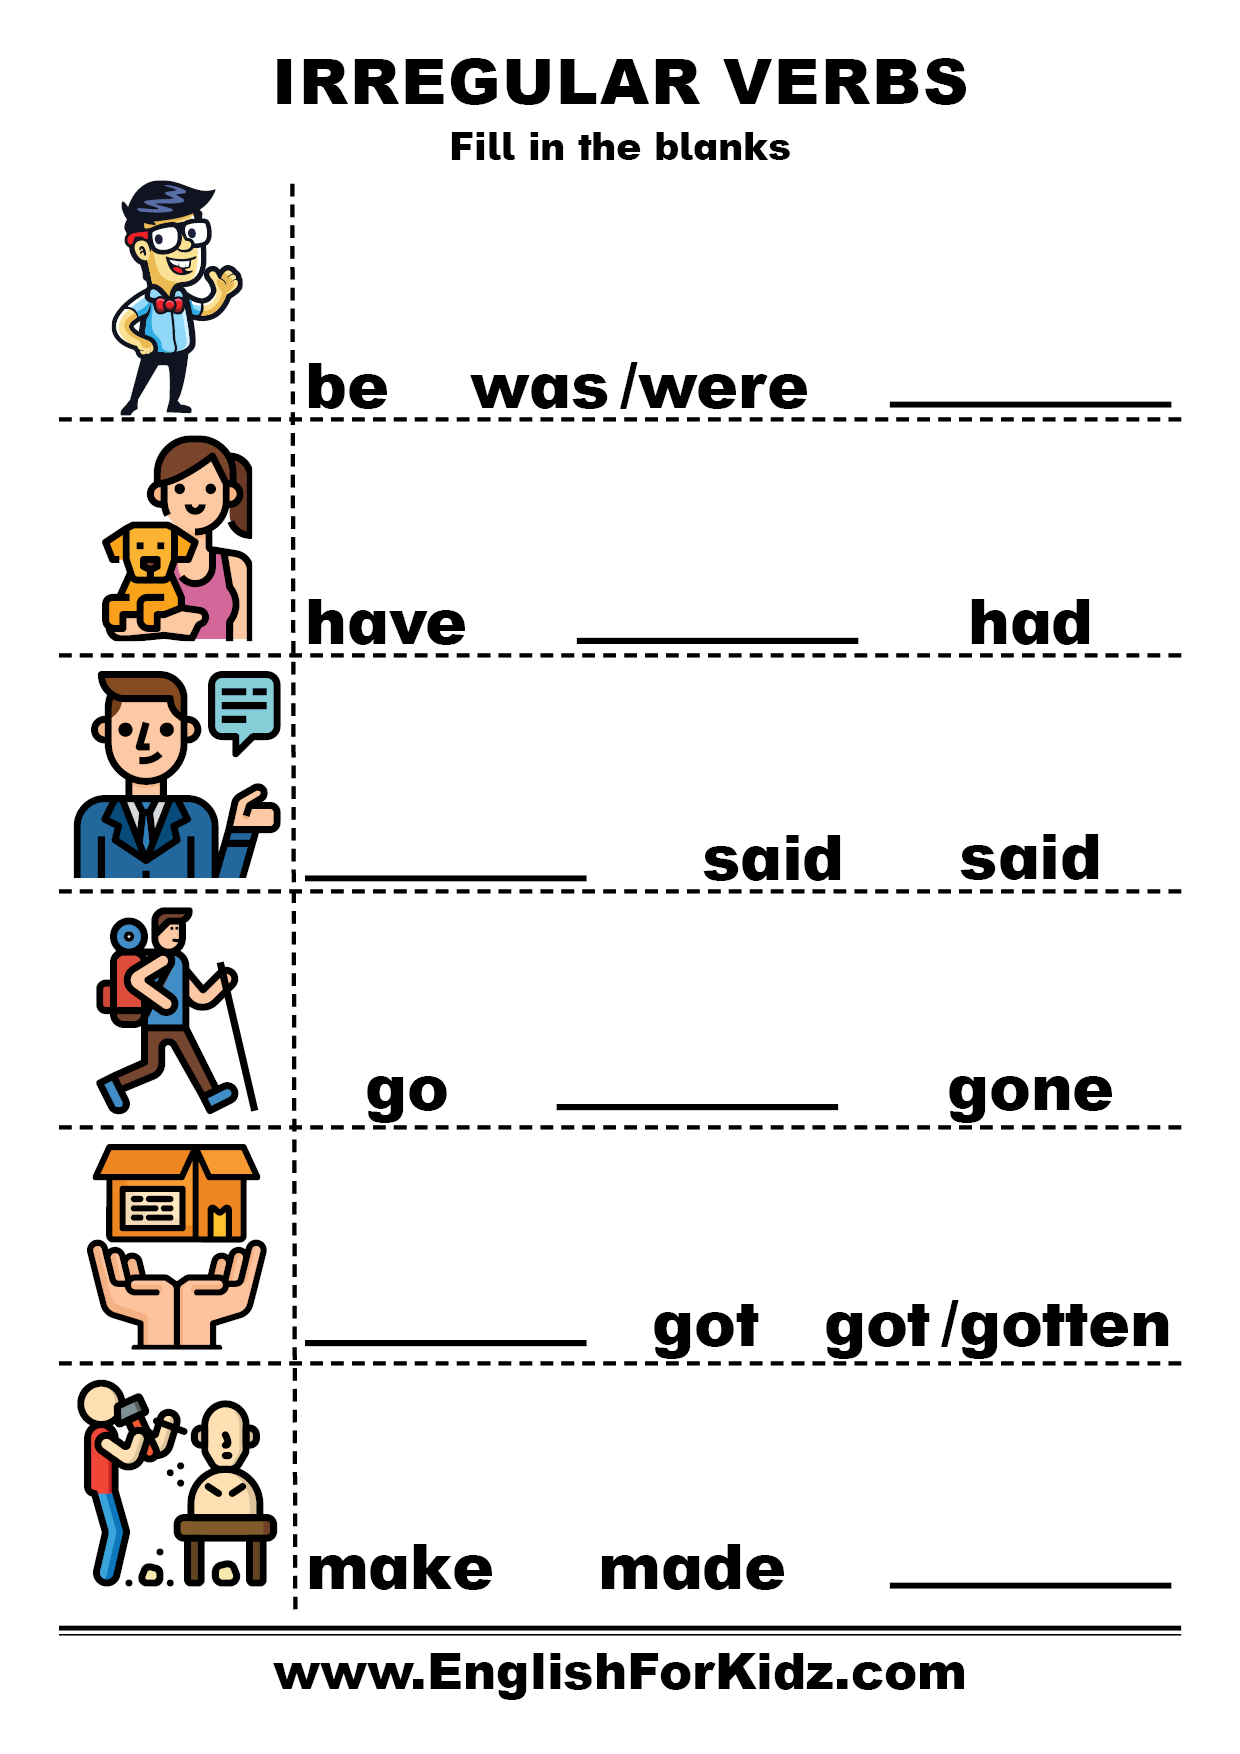 irregular verbs exercises and worksheets